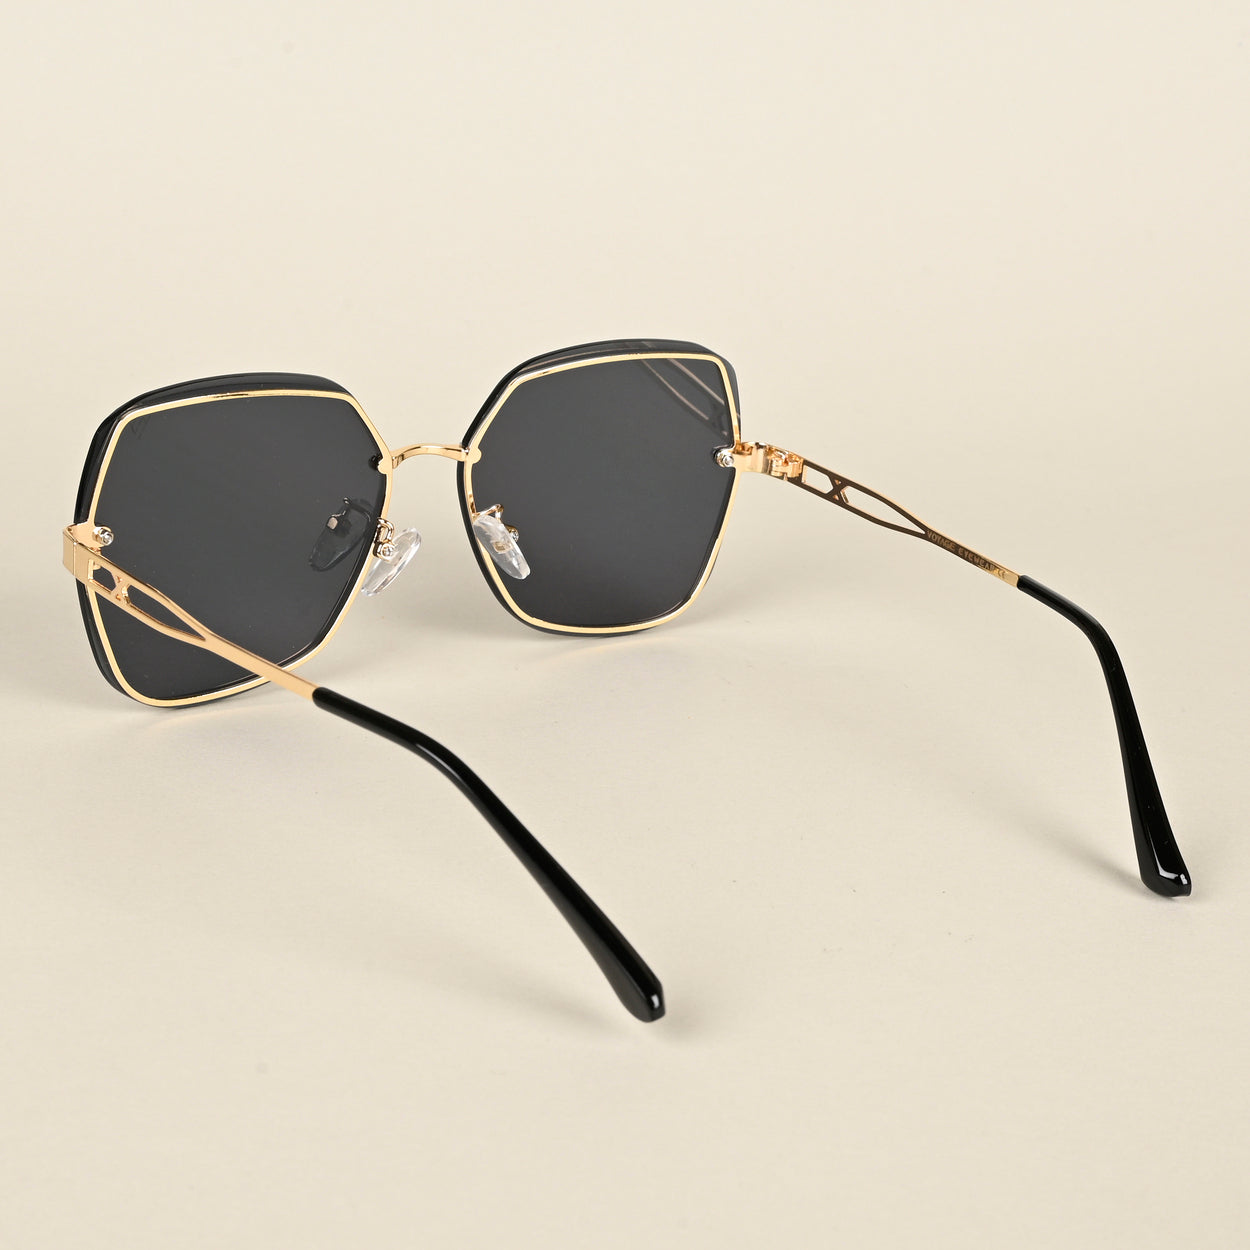 Voyage Black Oversize Sunglasses for Women (456MG4317)